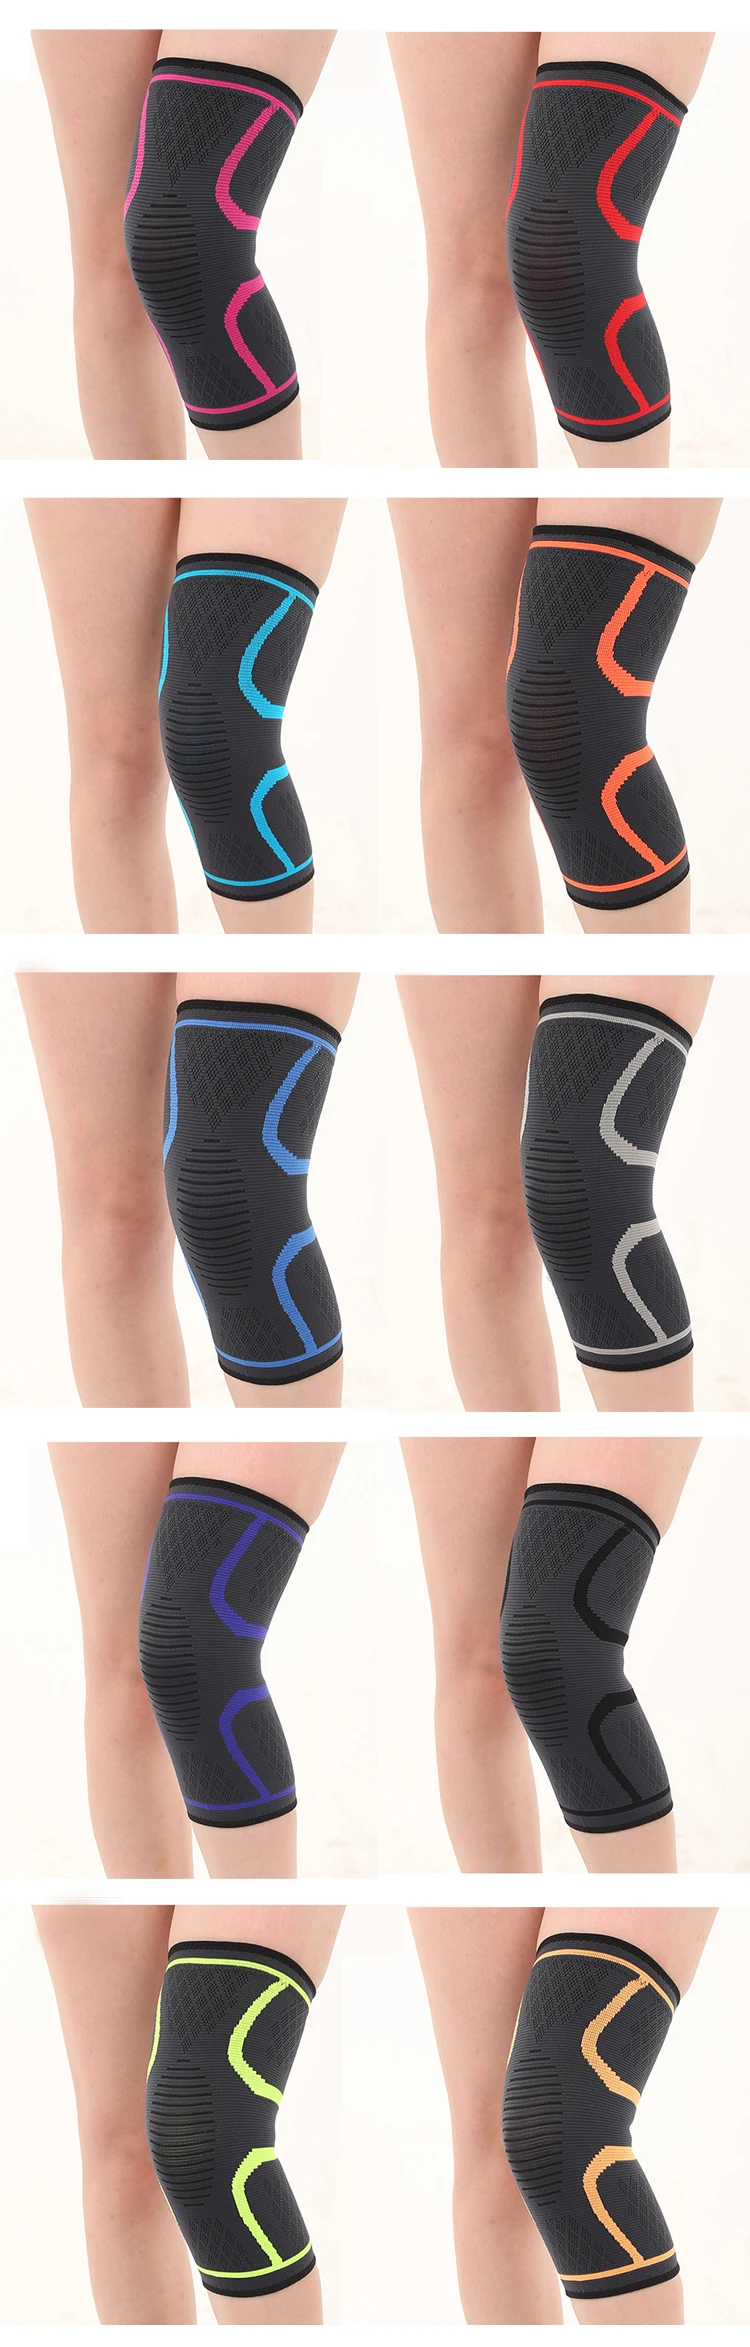 Enerup Spandex Breathable Volleyball Sport Knee Brace Sleeve For Arthritis Medical Adjustable